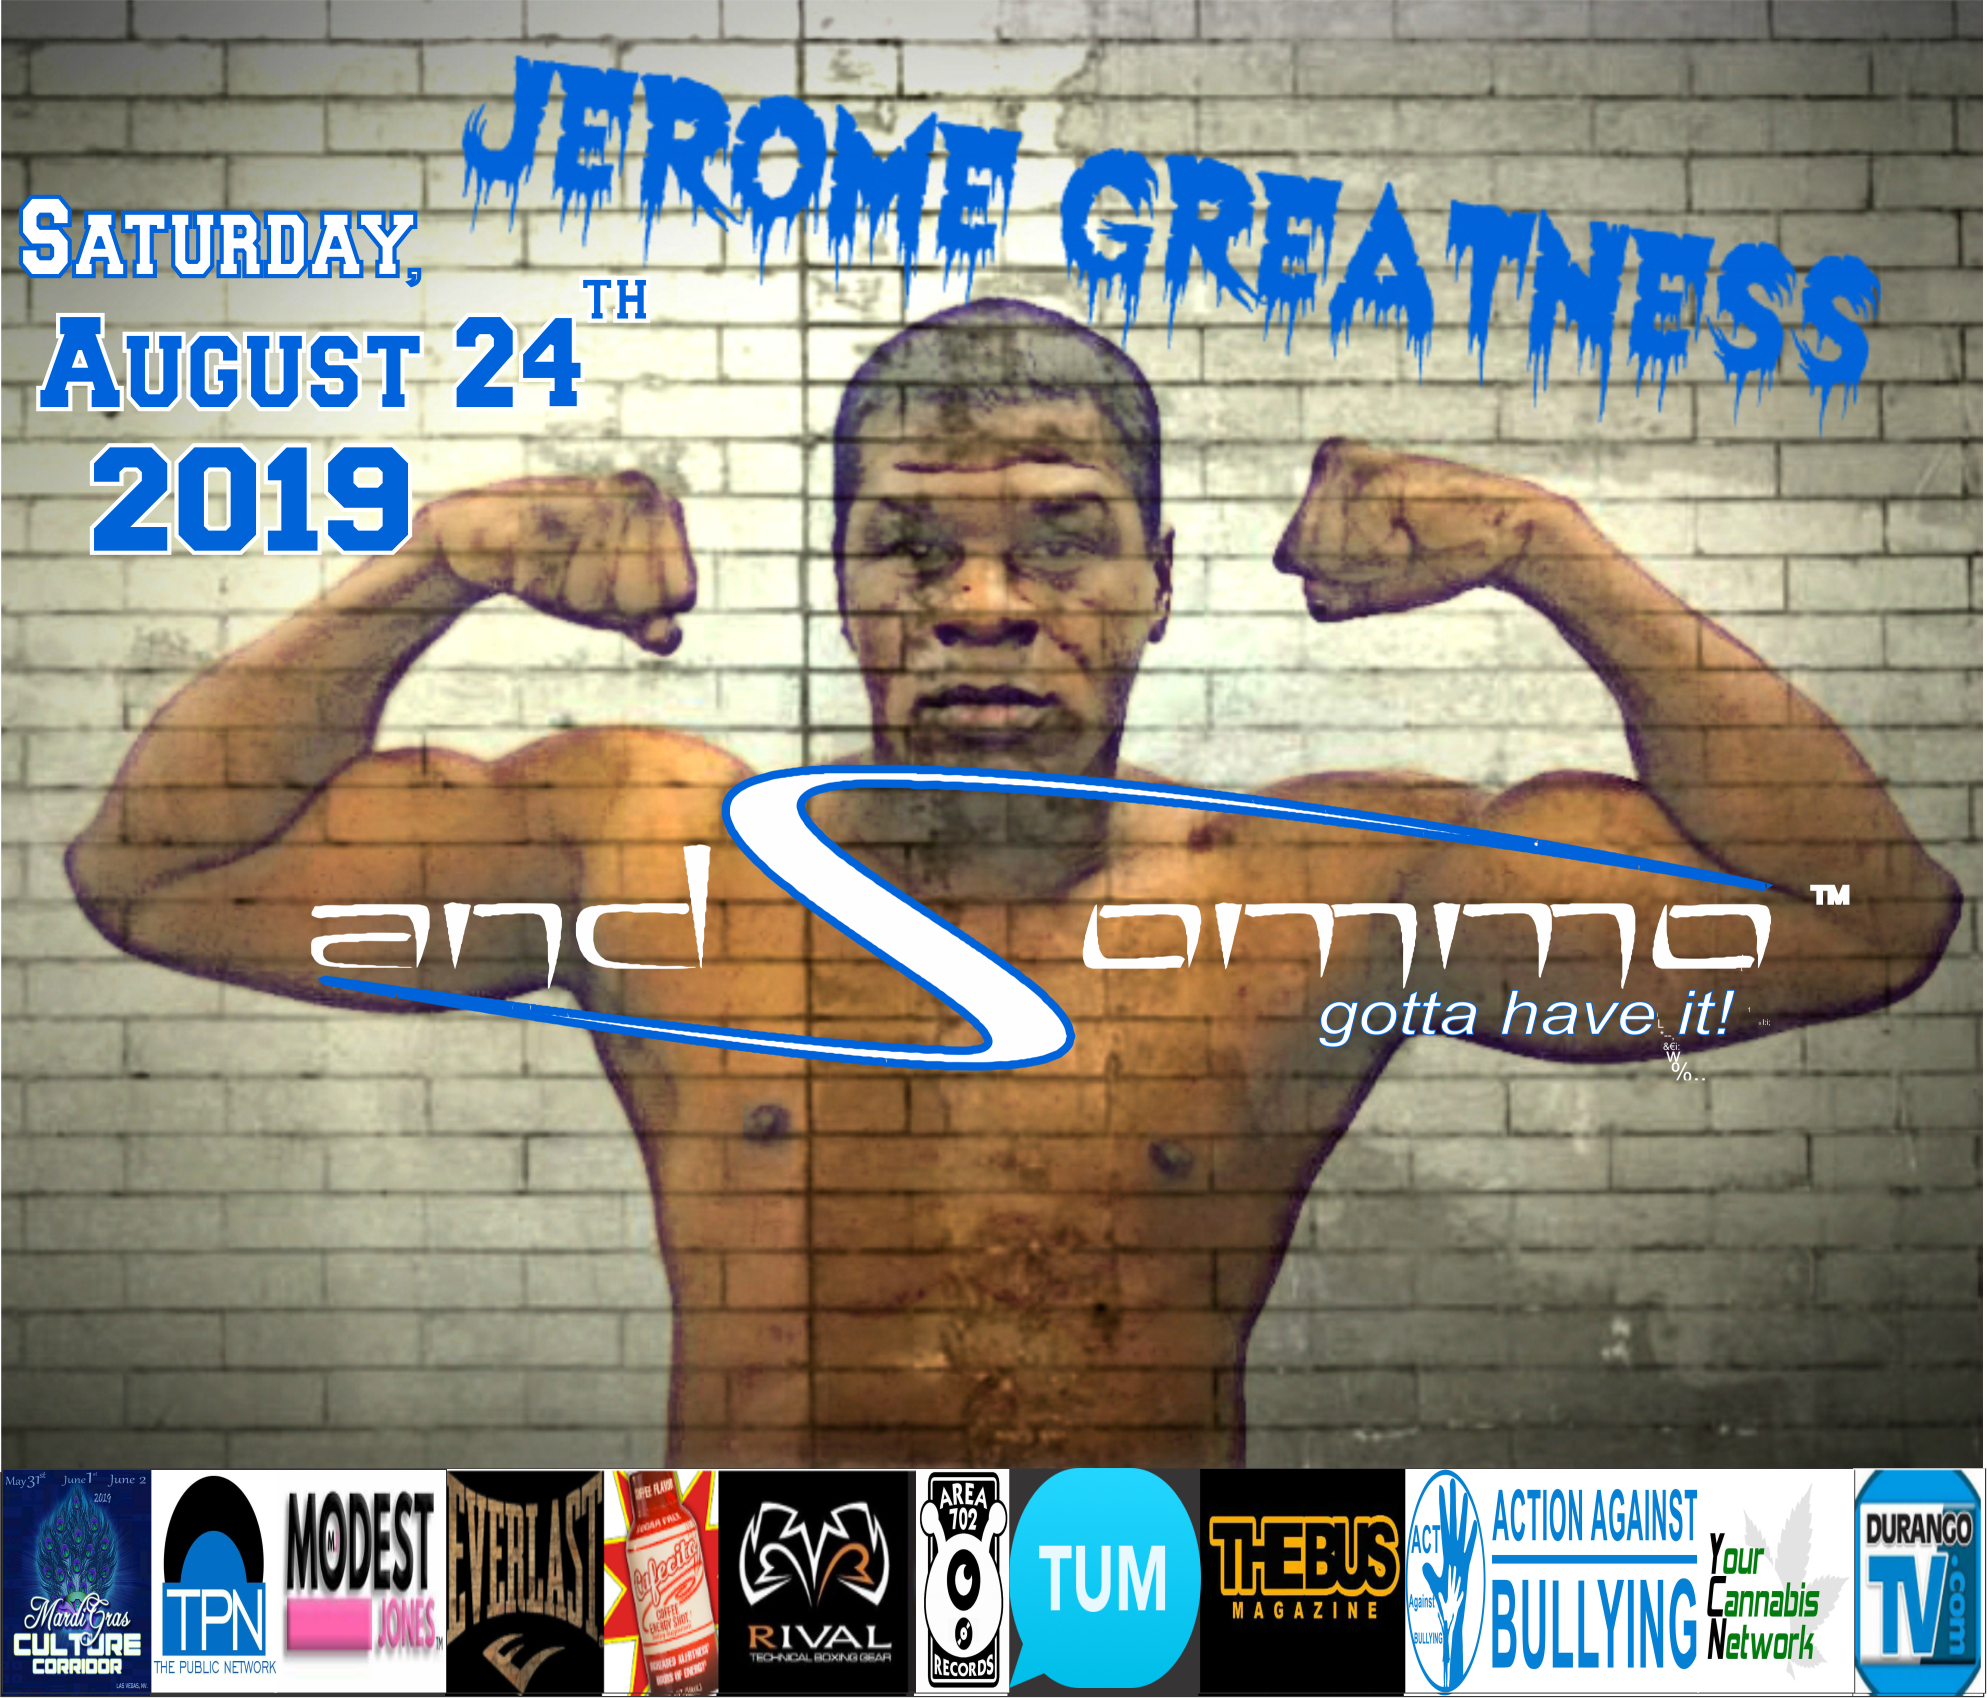 Jerome Greatness